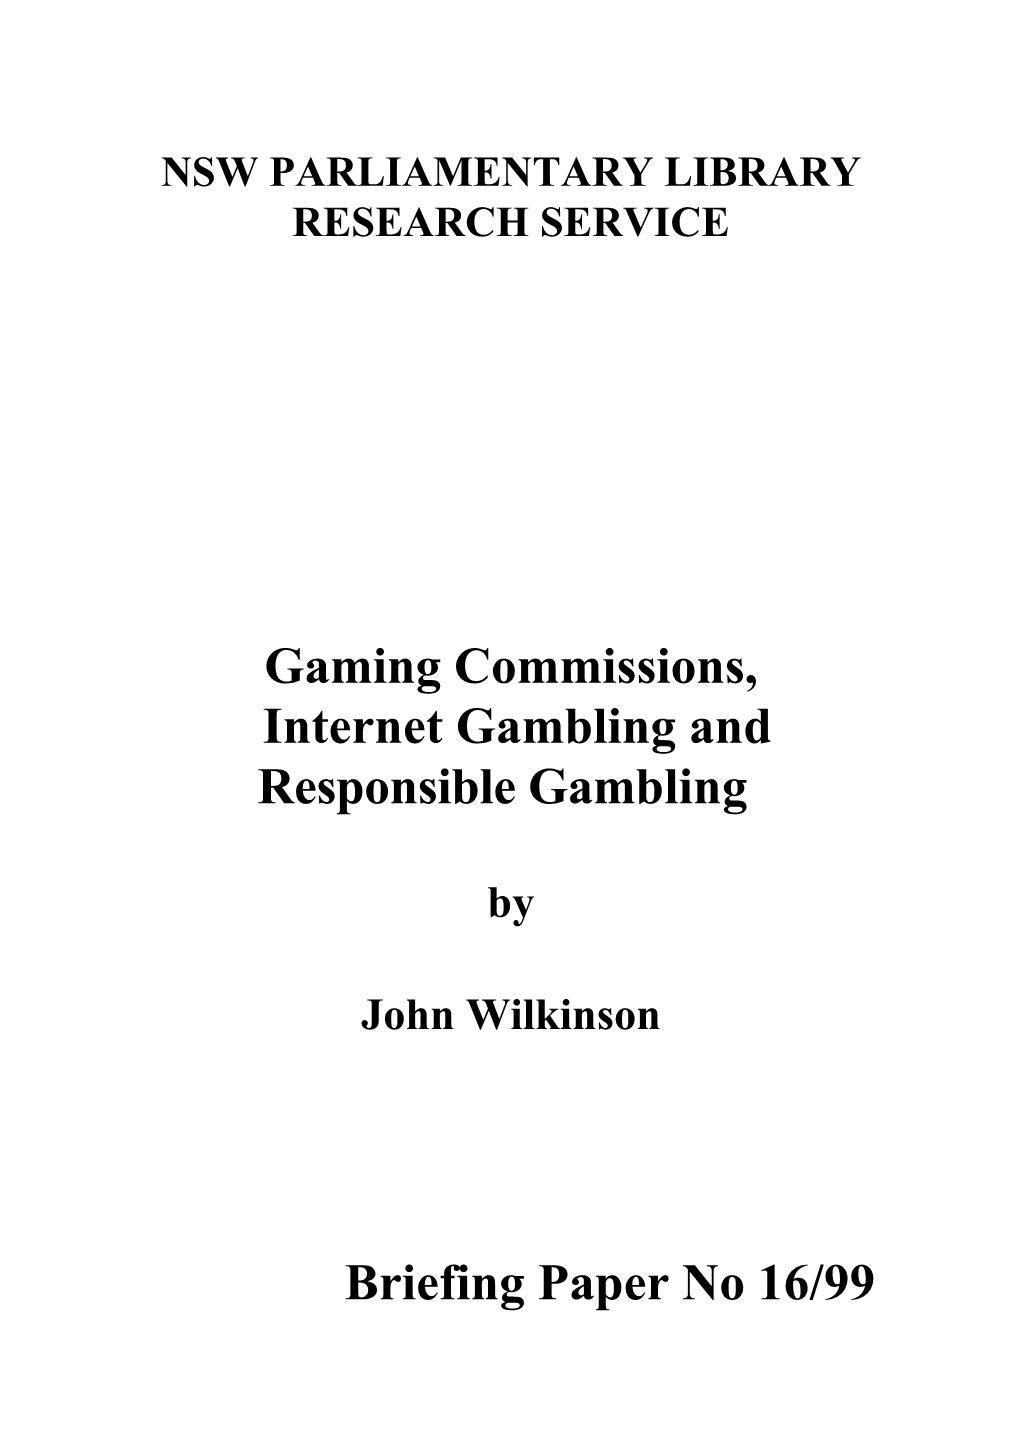 Gaming Commissions, Internet Gambling and Responsible Gambling